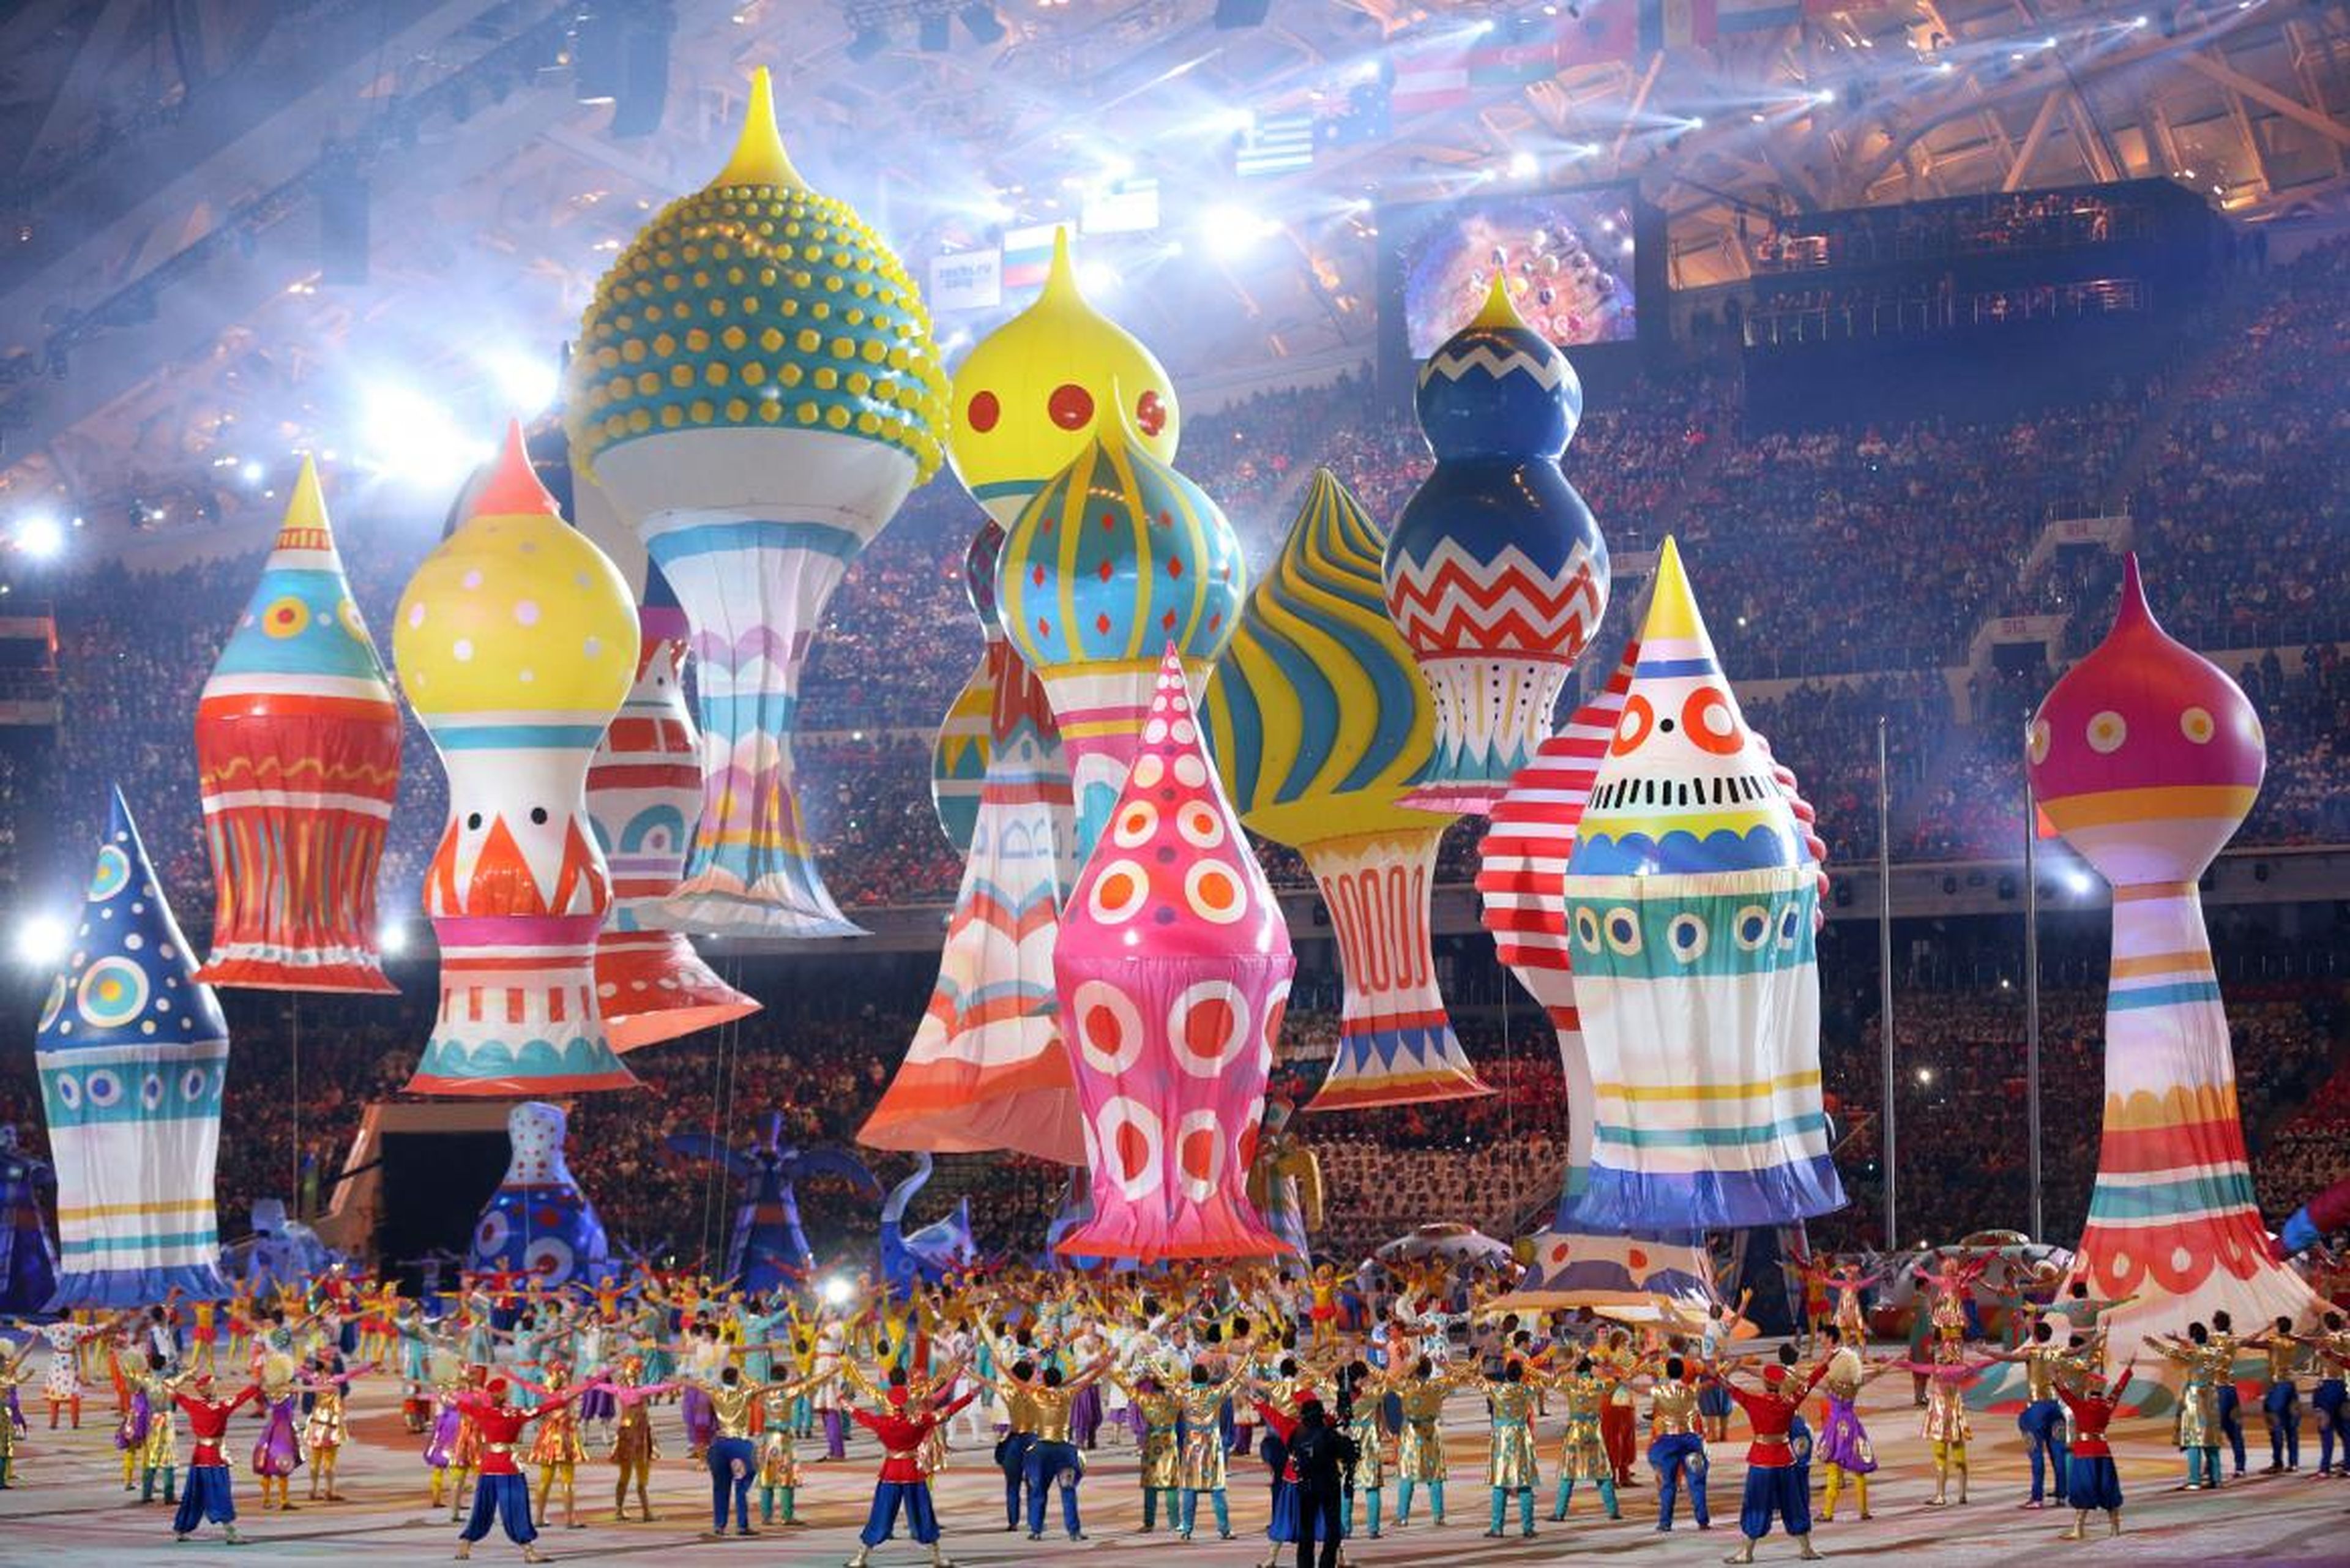 Russia spent $50 billion on the 2014 Winter Olympics